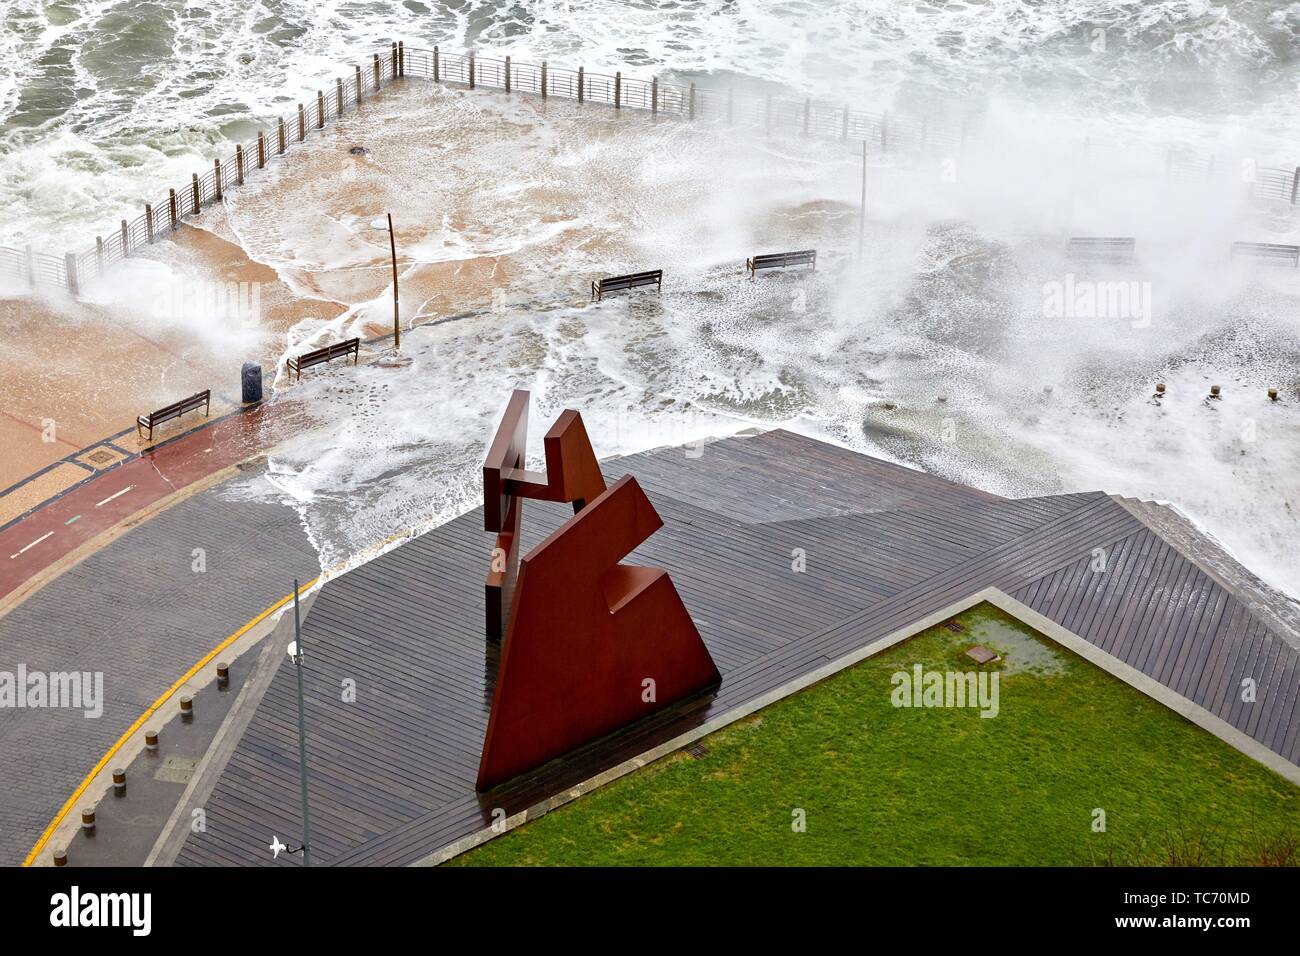 'Construcción Vacia' by Jorge Oteiza, Tempest in the Cantabrian Sea, Waves and Wind, Explosive Cyclogenesis, Paseo Nuevo, Donostia, San Sebastian, Stock Photo